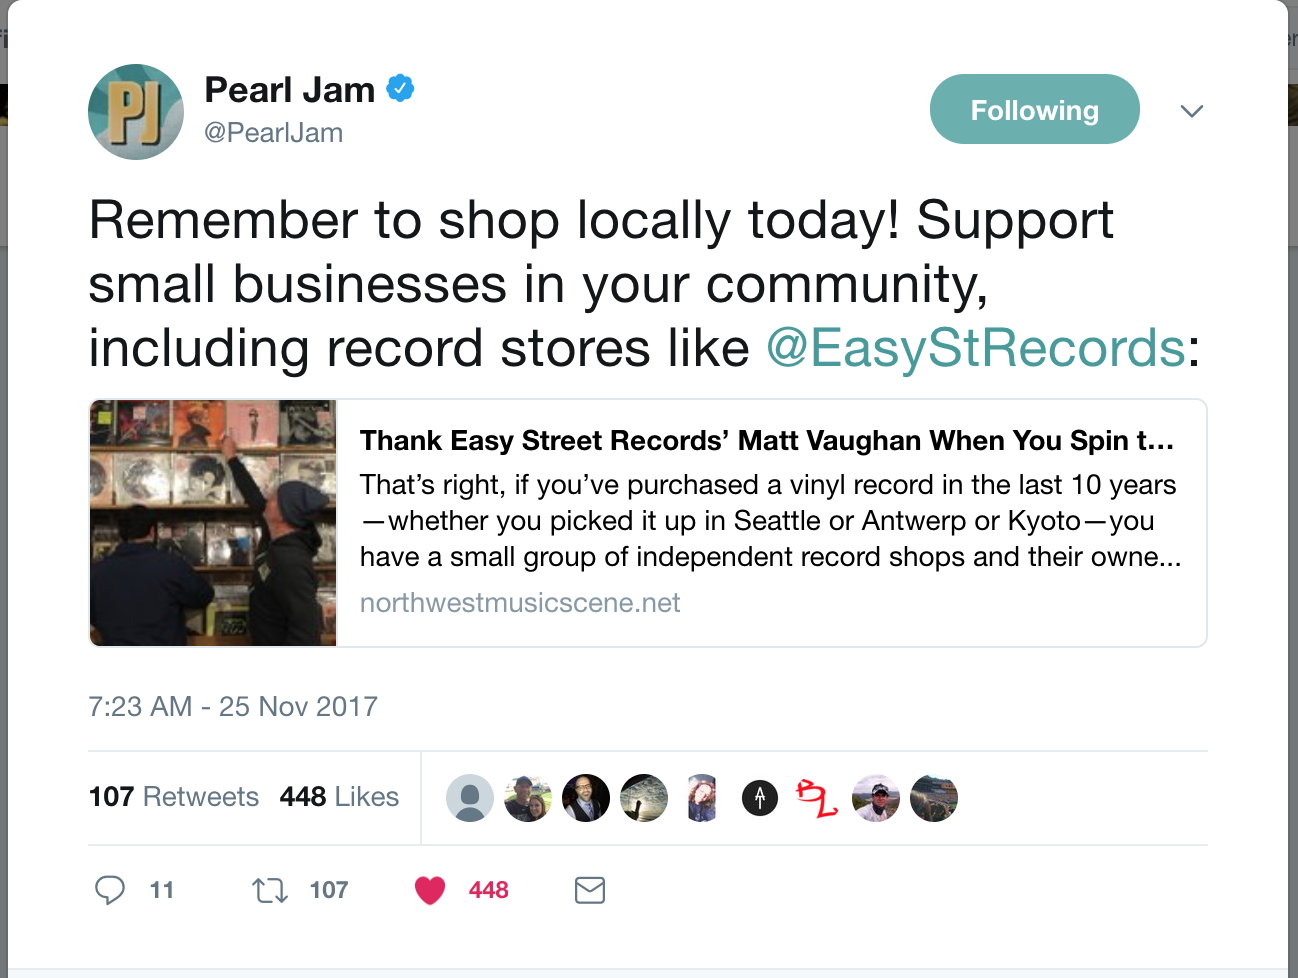 Pearl Jam Tweets the Story